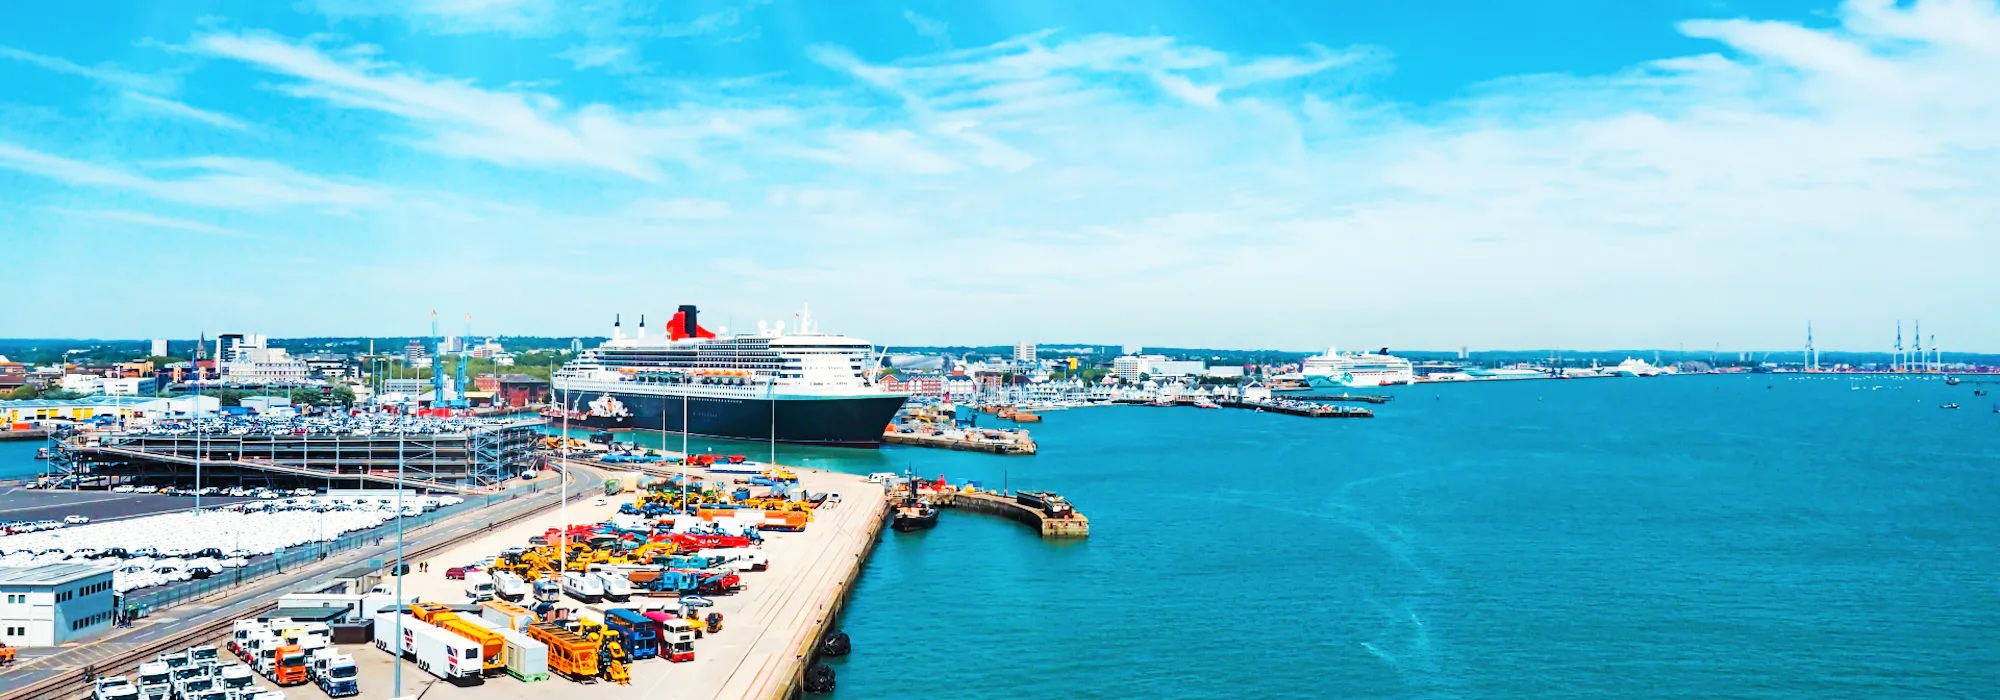 Cruisevakantie Southampton